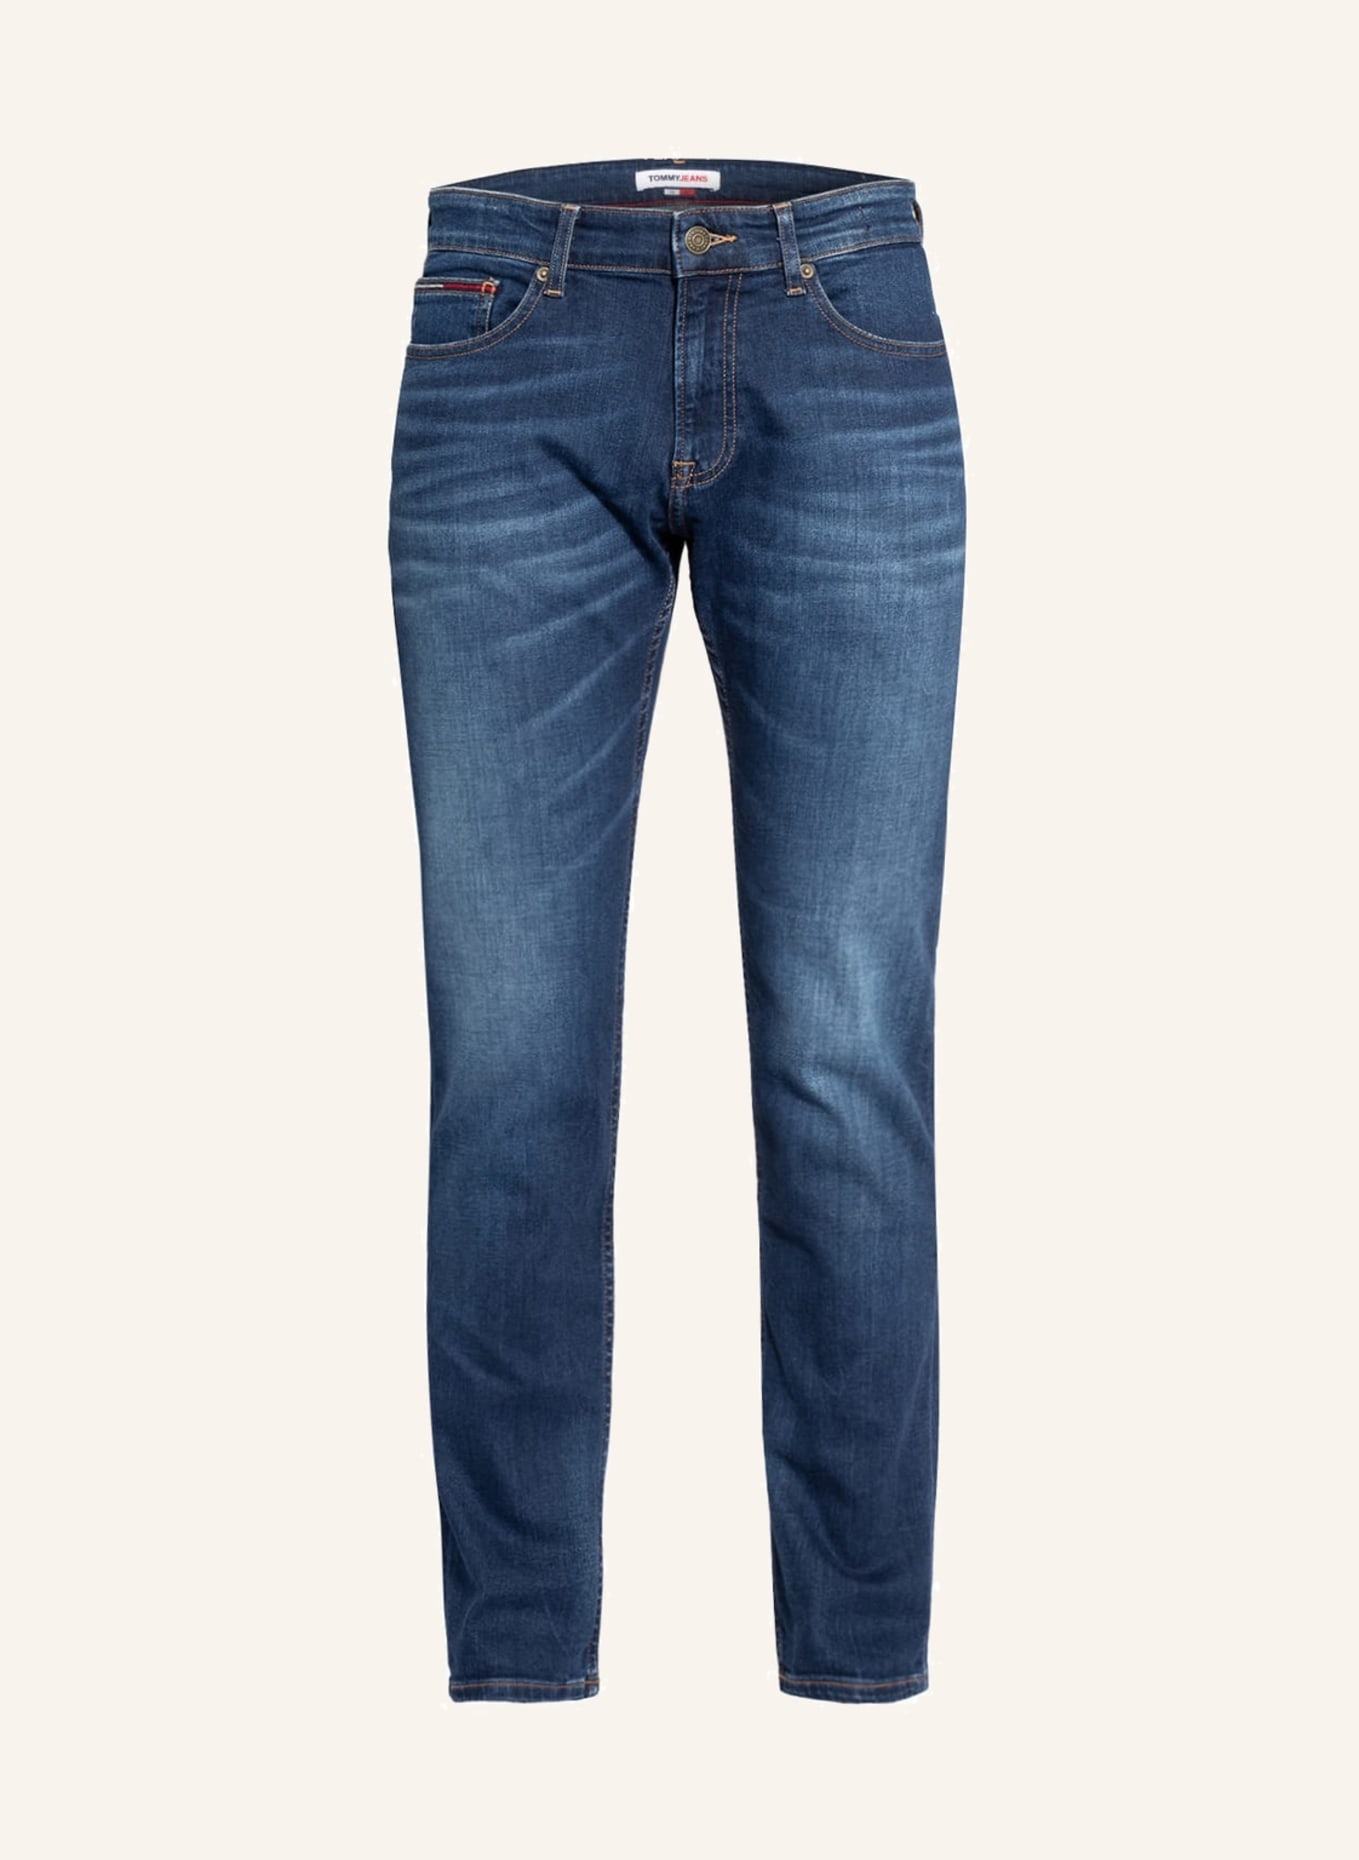 TOMMY JEANS Jeans SCANTON Slim Fit, Farbe: 1BK Aspen Dark Blue Stretch (Bild 1)